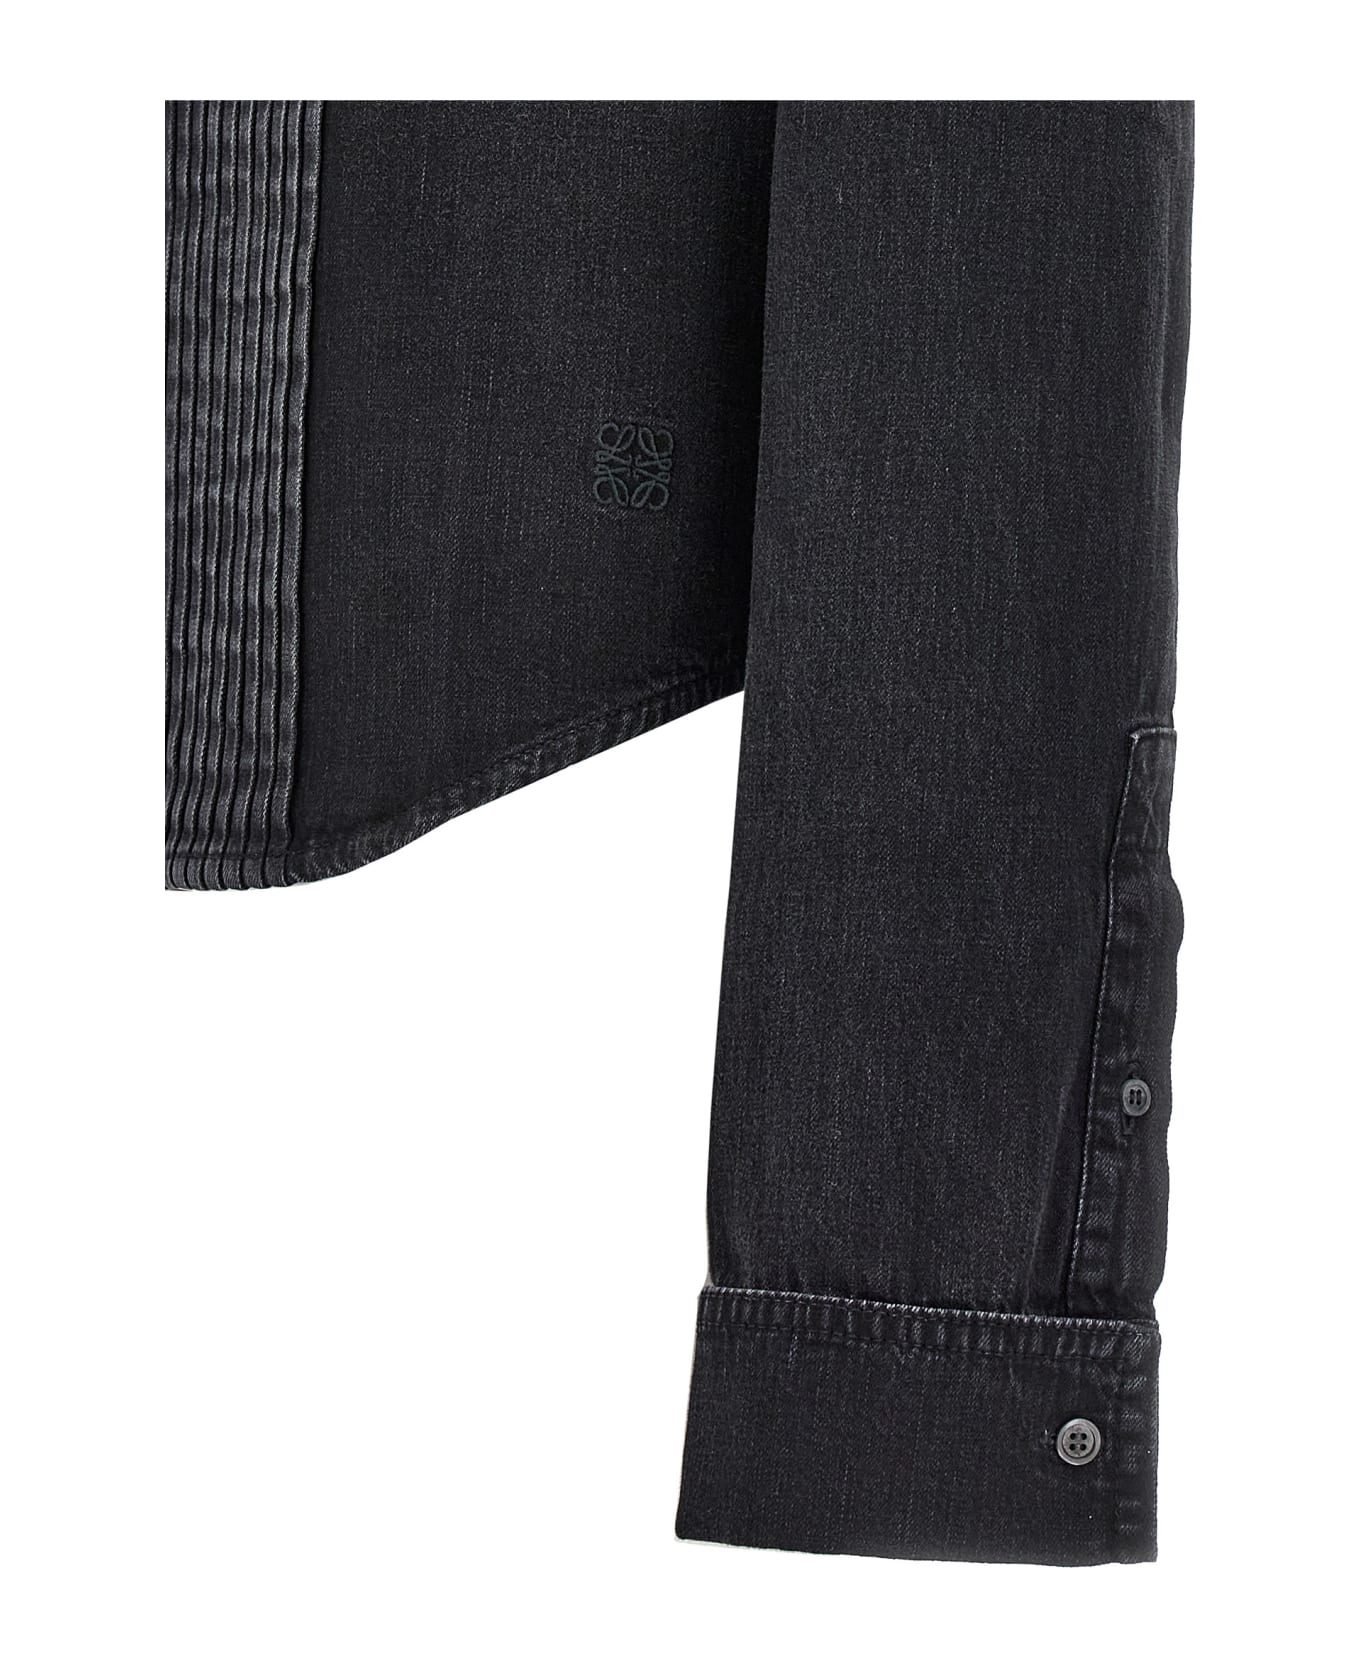 Loewe 'pleated' Shirt - Black   レザージャケット